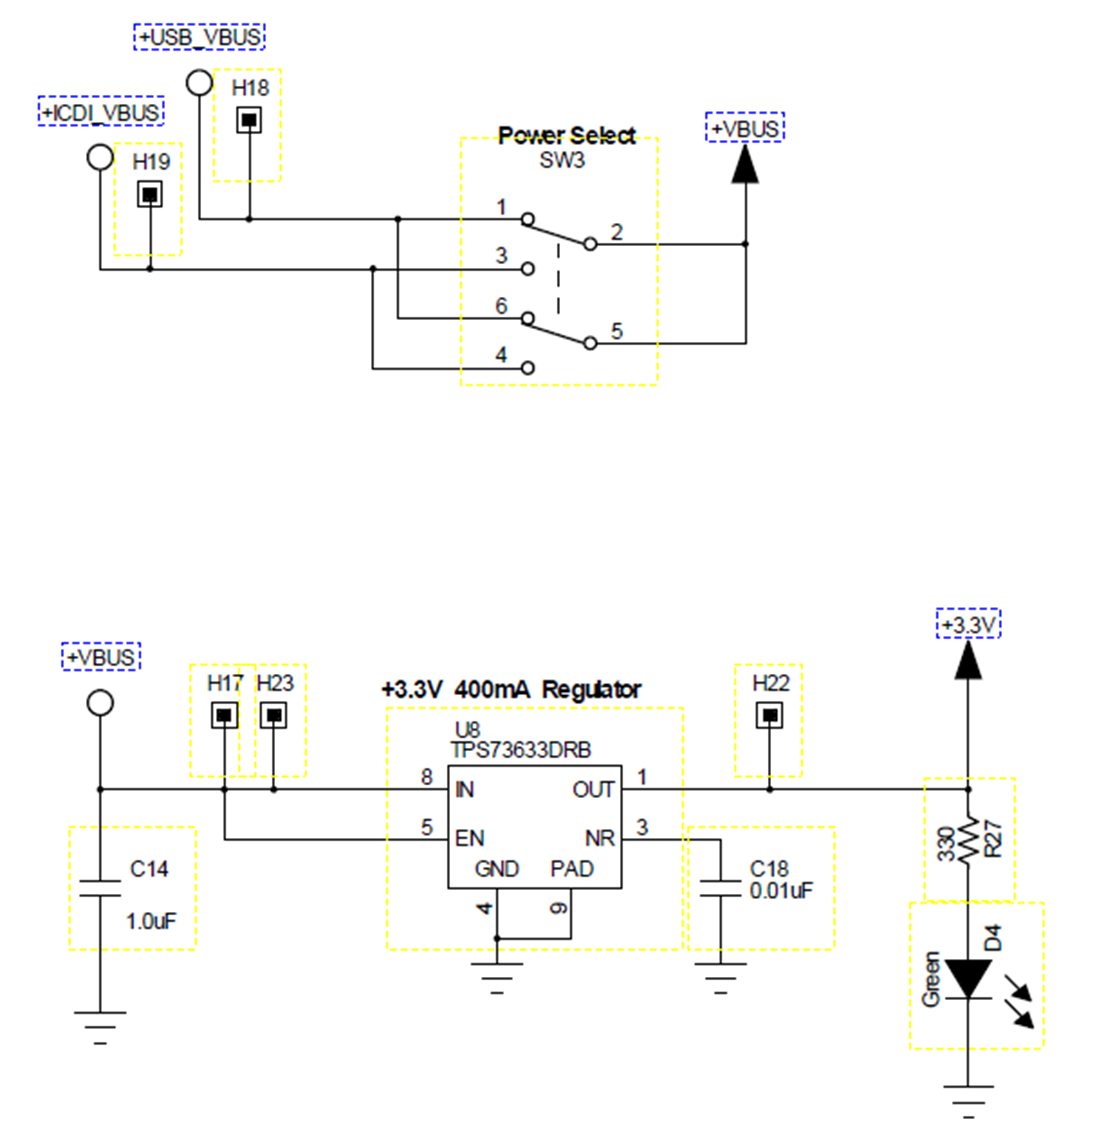 spna243-ek-tm4c123gxl-launchpad-power-selection-schematic.png